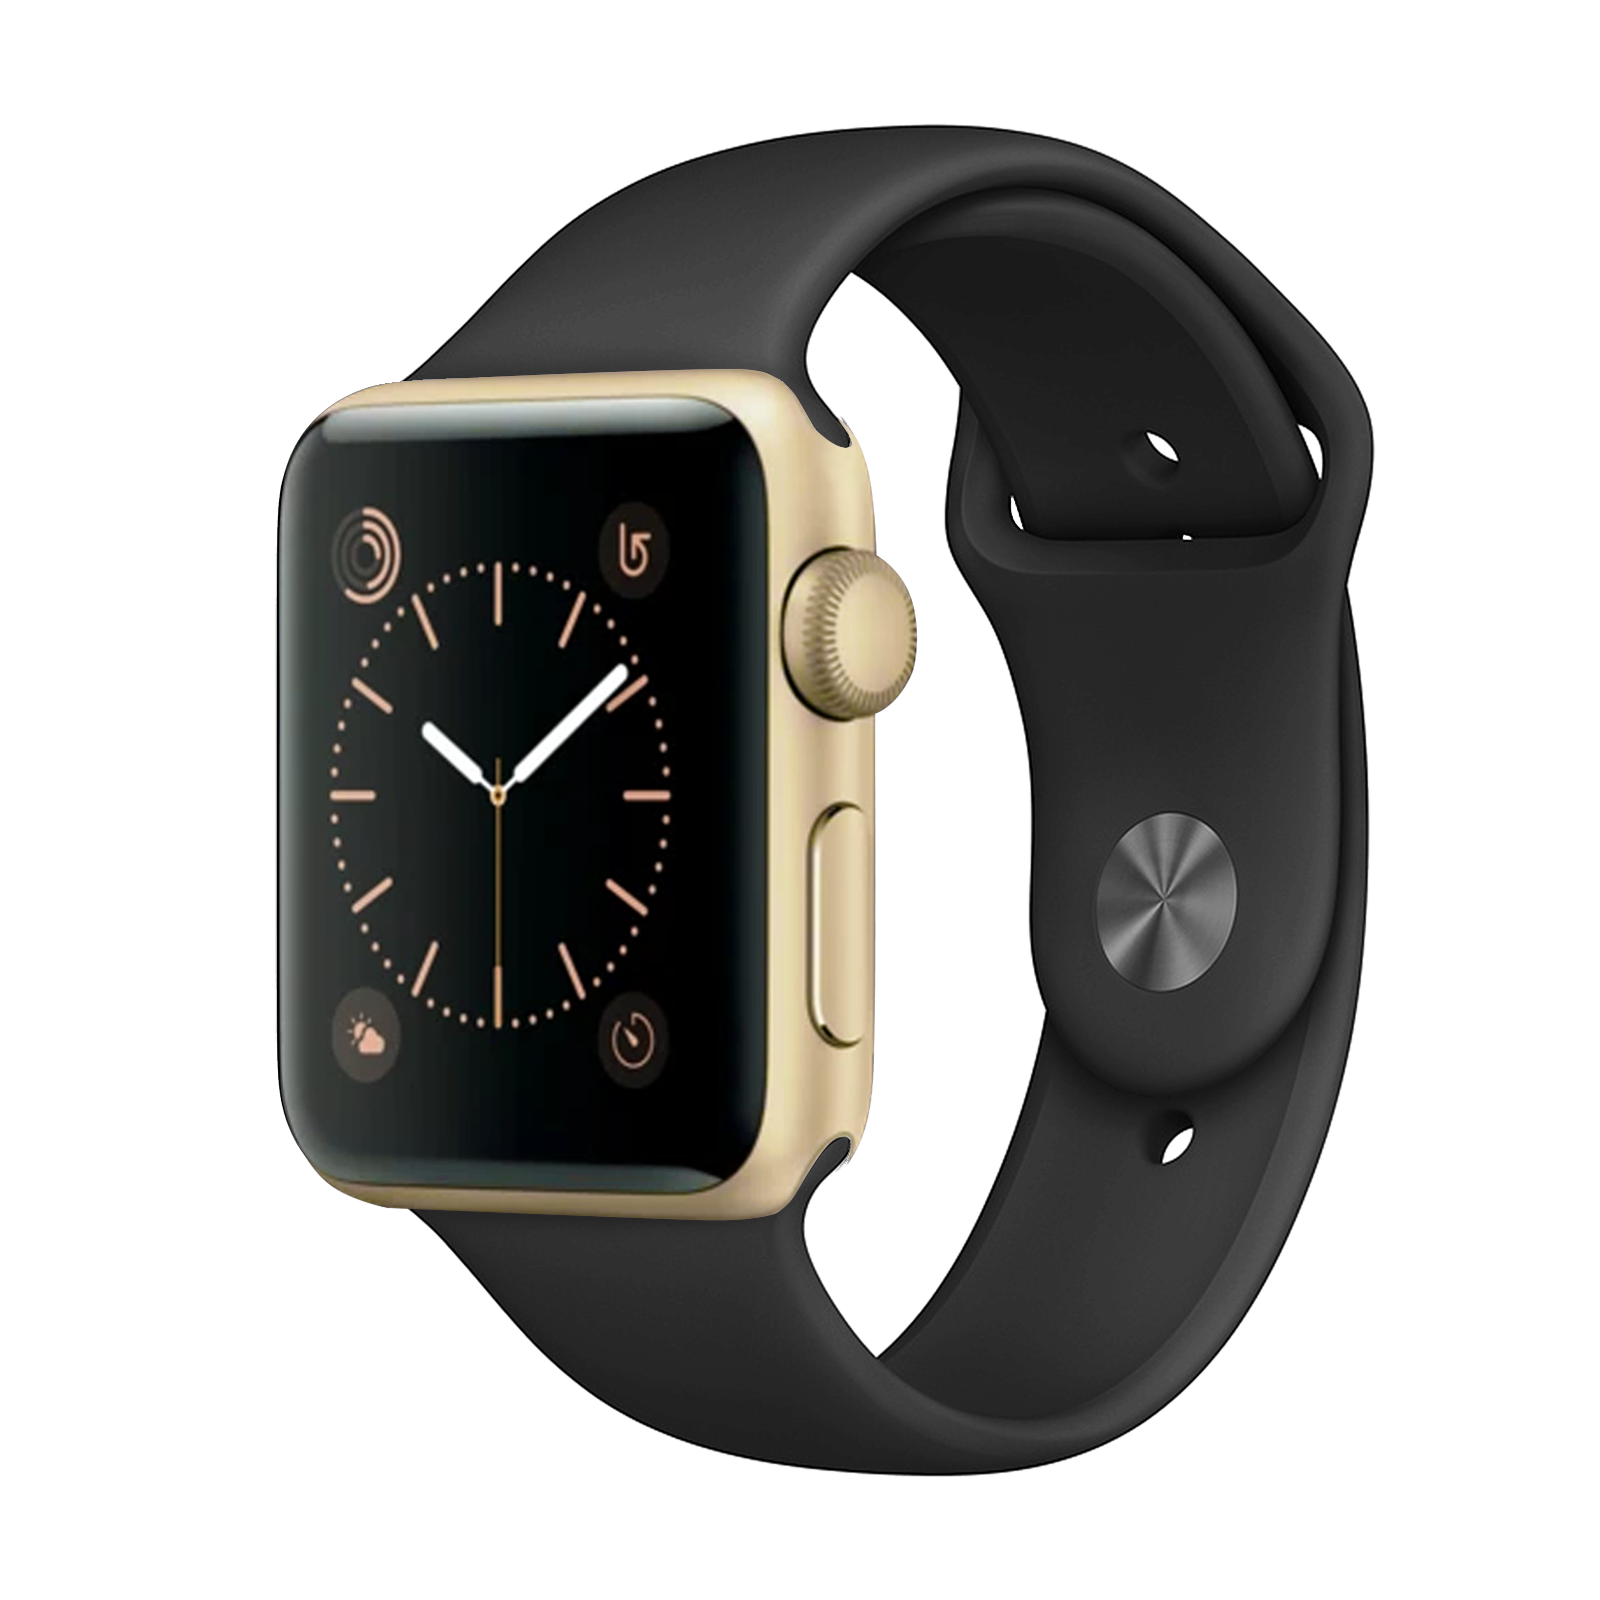 Apple Watch Series 2 Aluminum 42mm Gold Good - WiFi